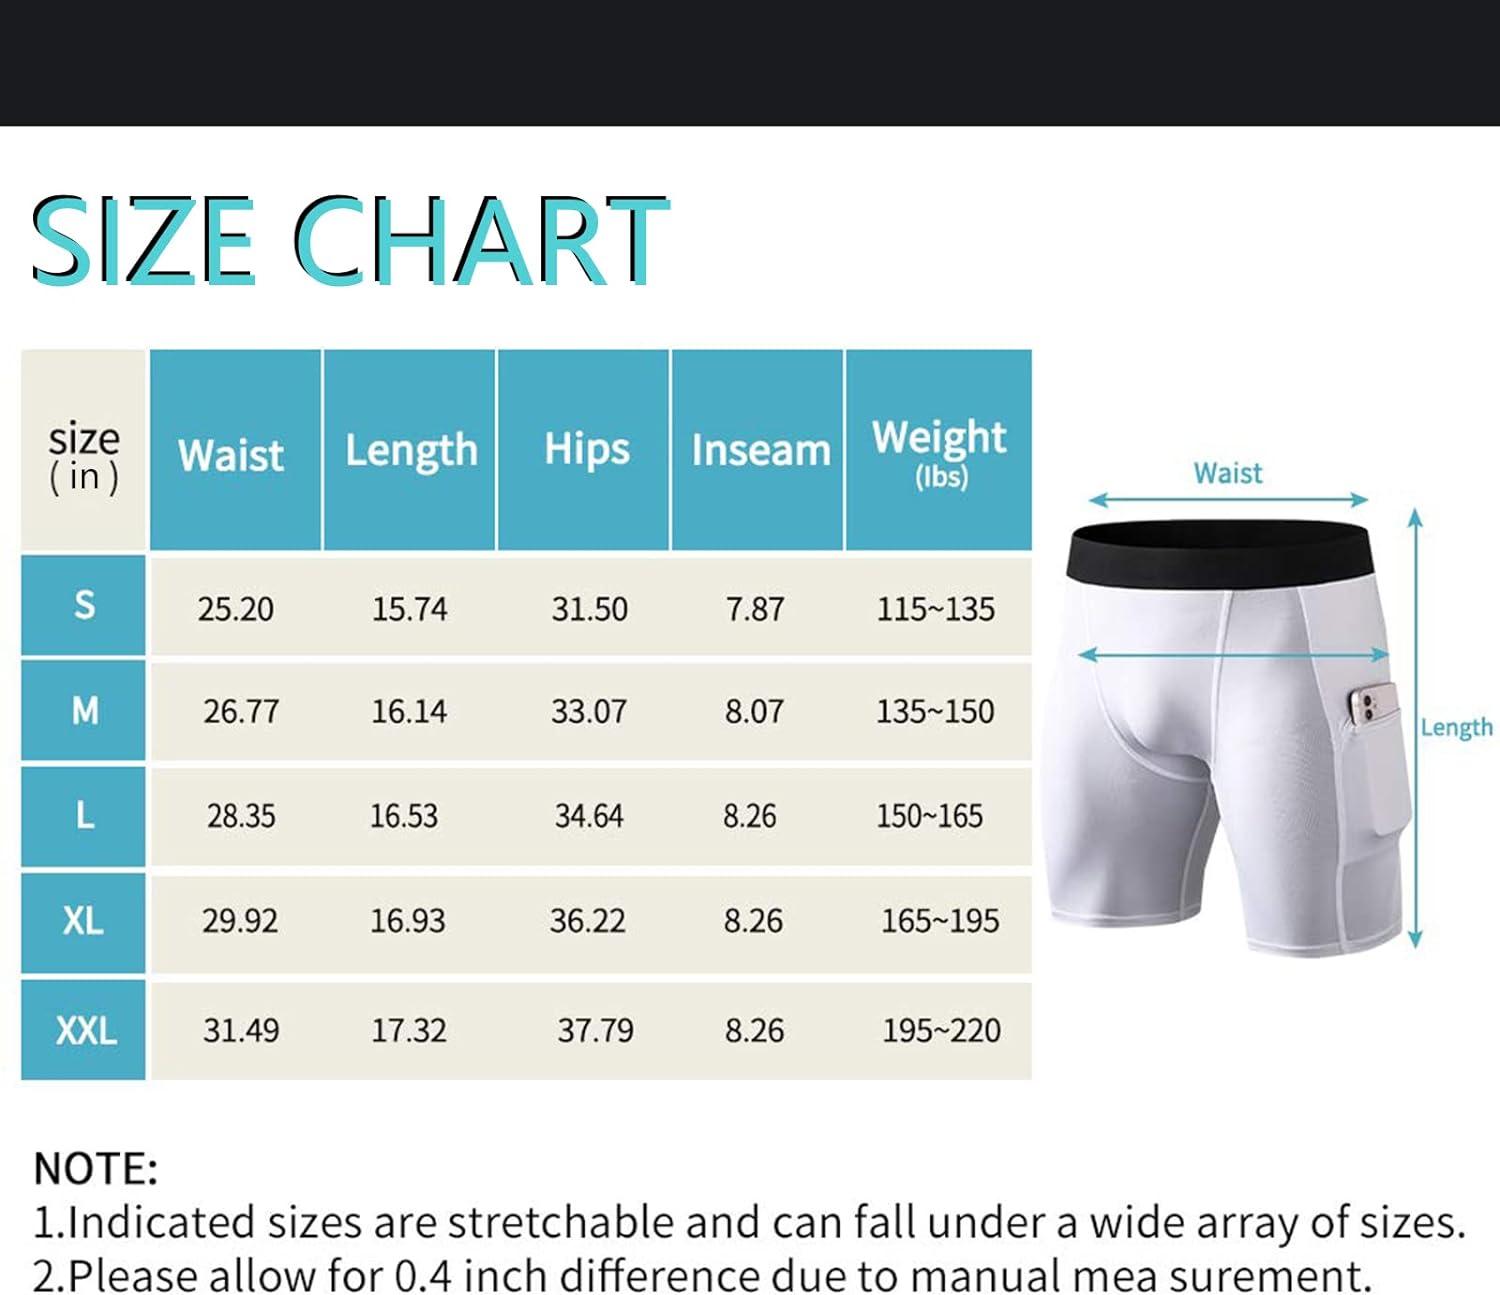 ABTIOYLLZ 3 Pack Compression Shorts for Men Spandex Running Workout  Athletic Baselayer Underwear Shorts Pocket 3pack